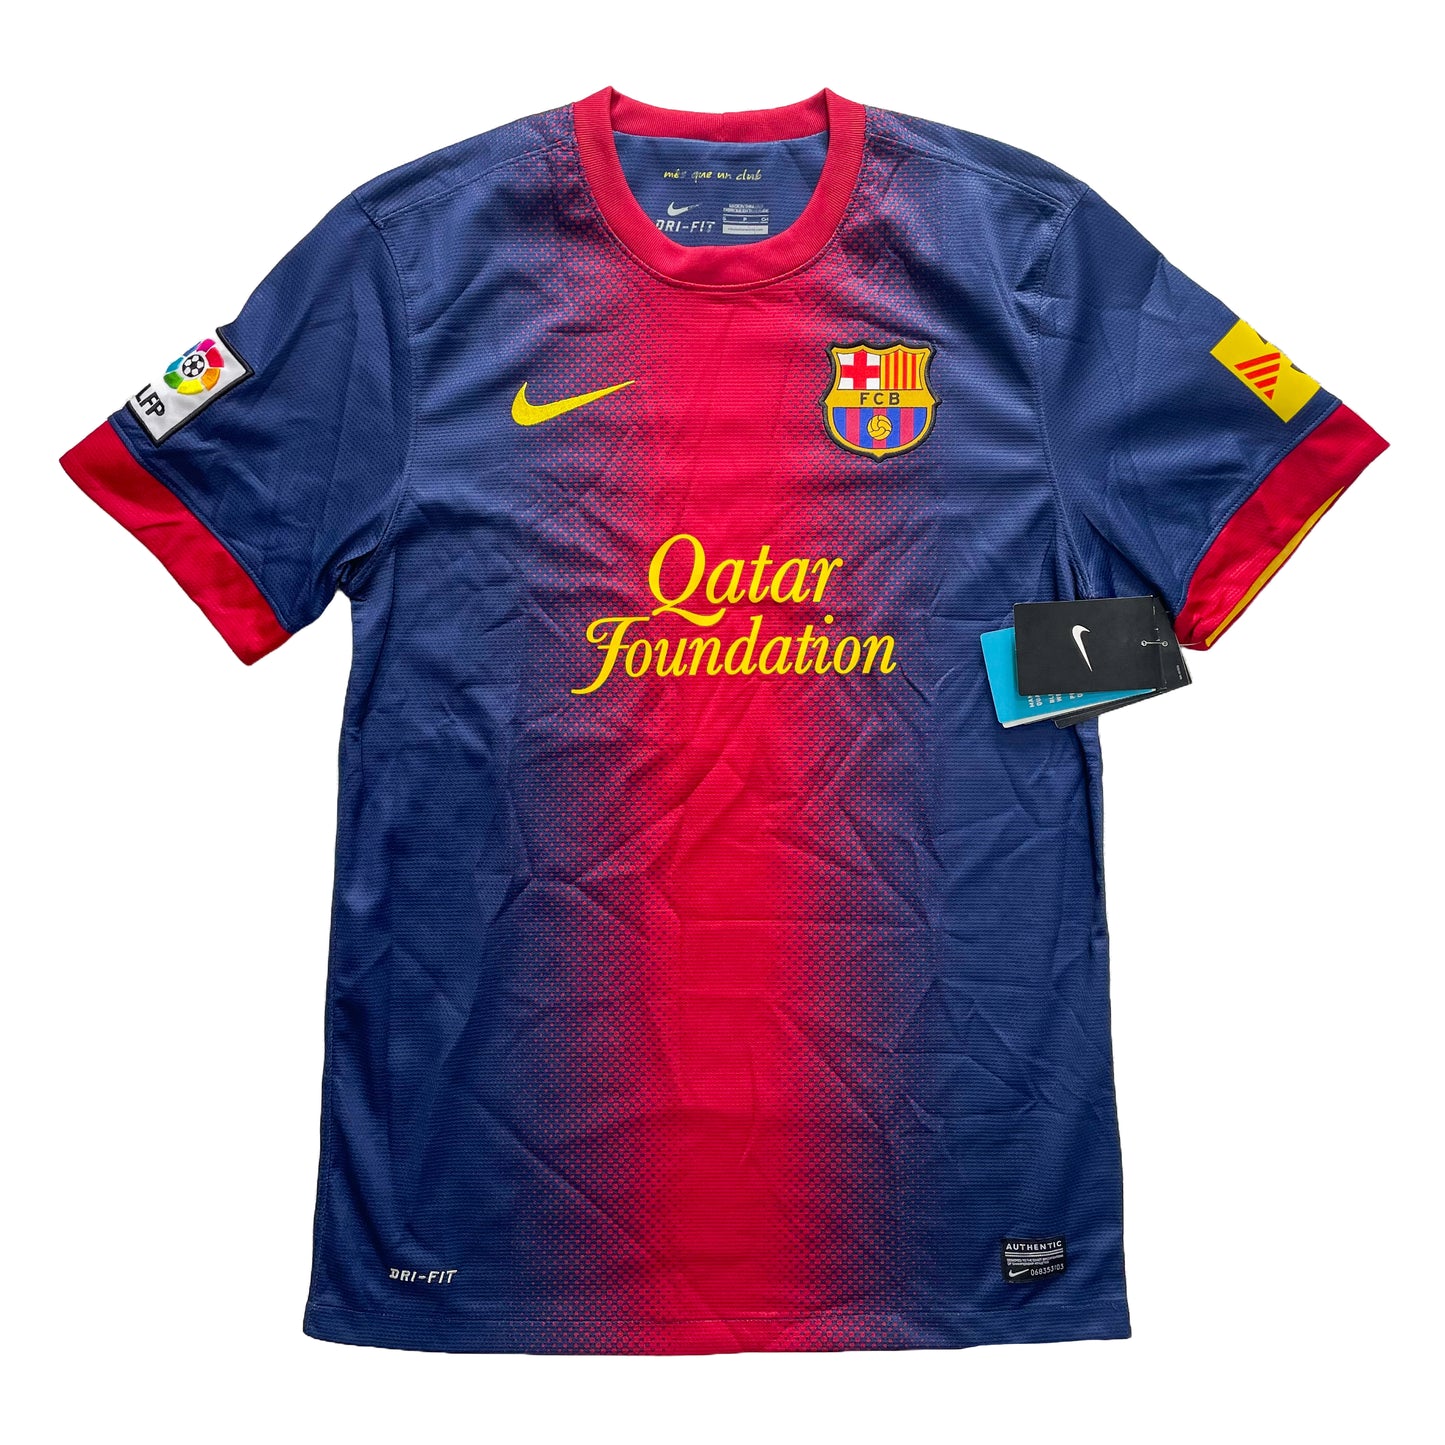 <tc>2012-2013 FC Barcelona camiseta local #10 Messi (S)</tc>